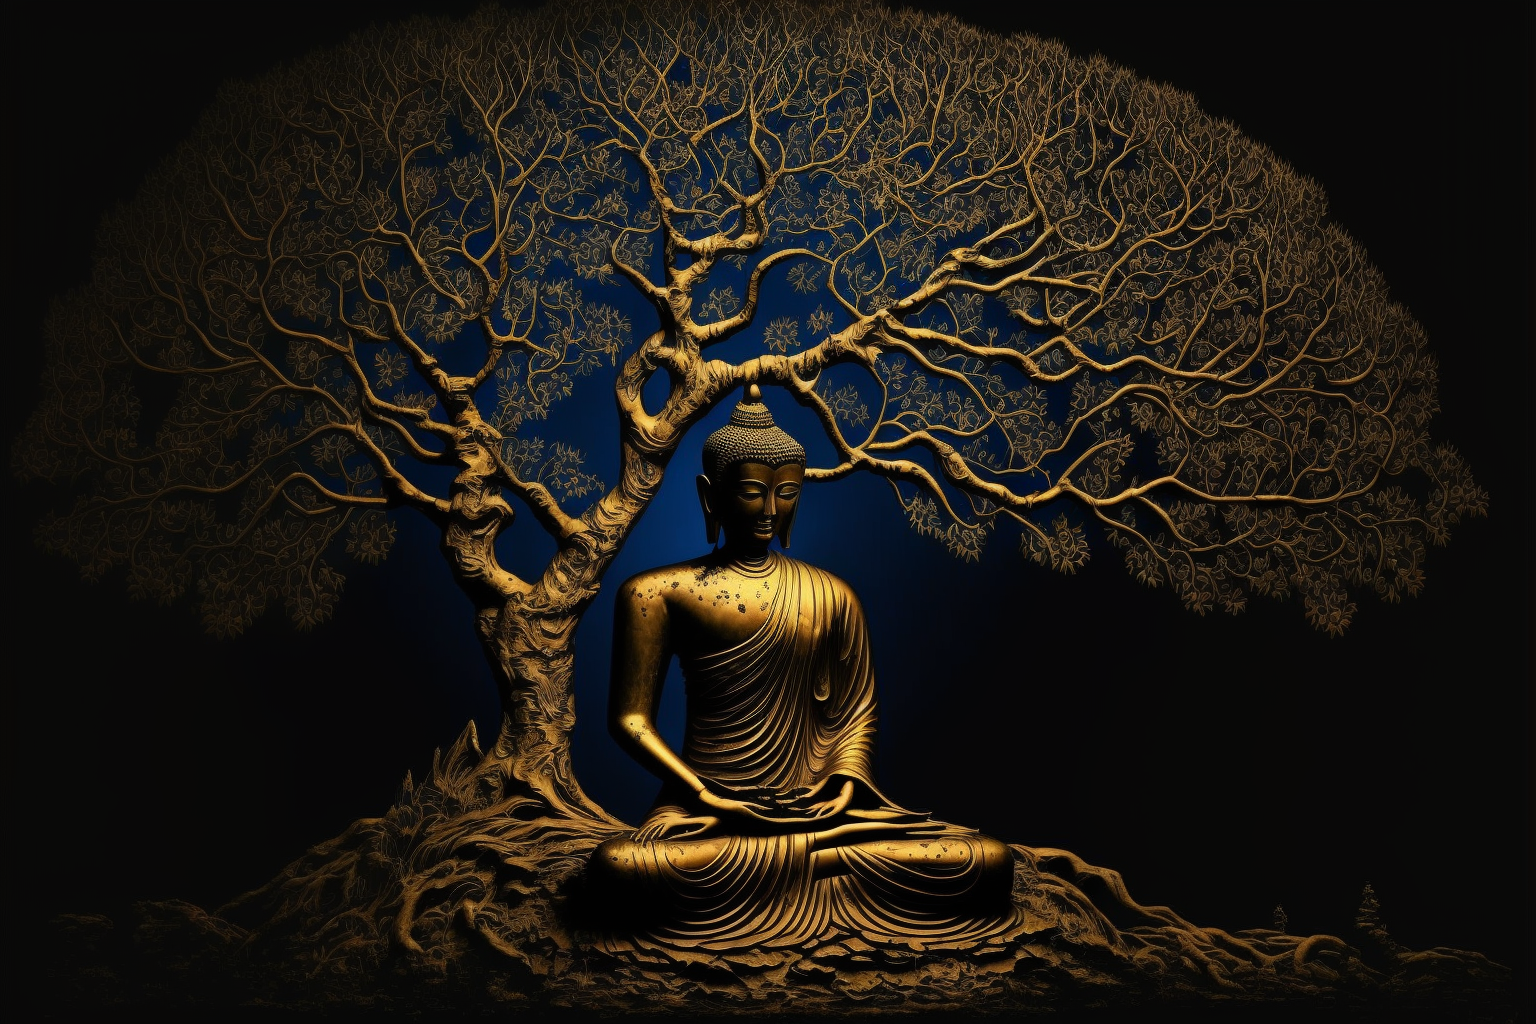 https://dr-alexandra-mueller.de/wp-content/uploads/2022/12/CAPSULAR2022_buddha_meditation_infront_of_tree_midnightblue_gol-1.png